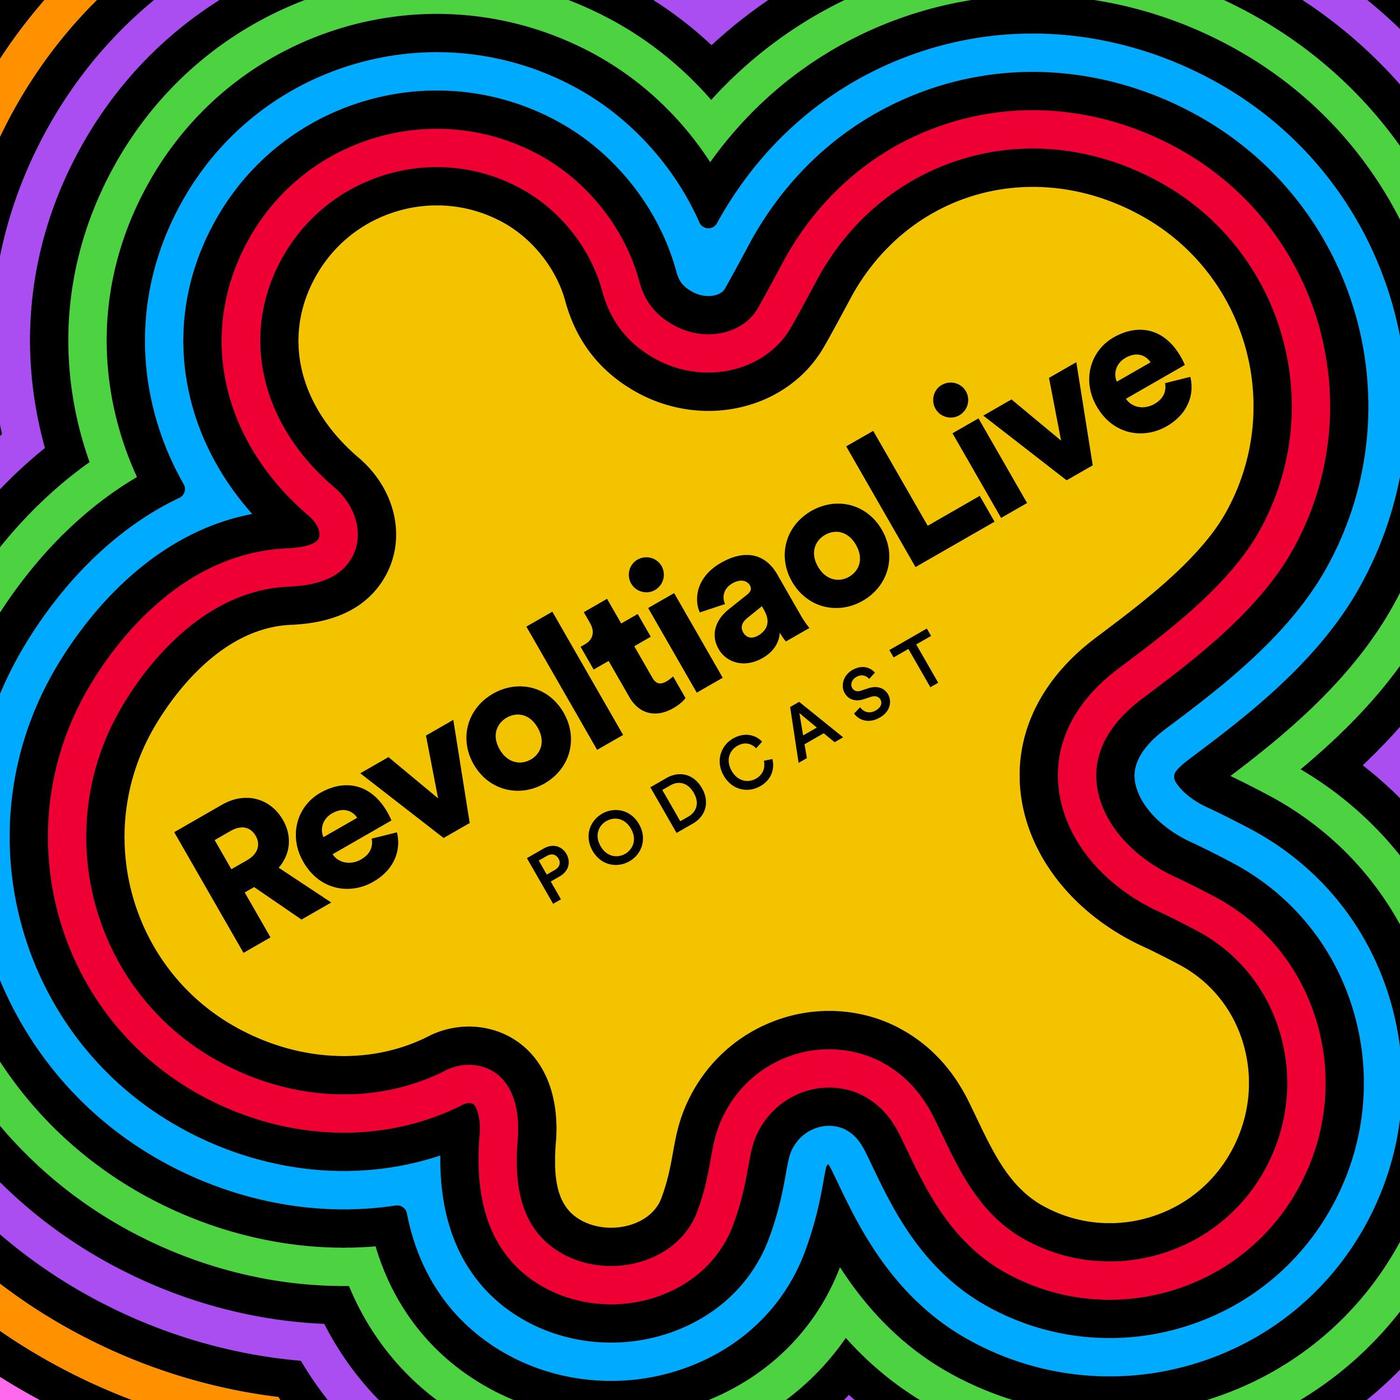 Revoltiao Live Podcast